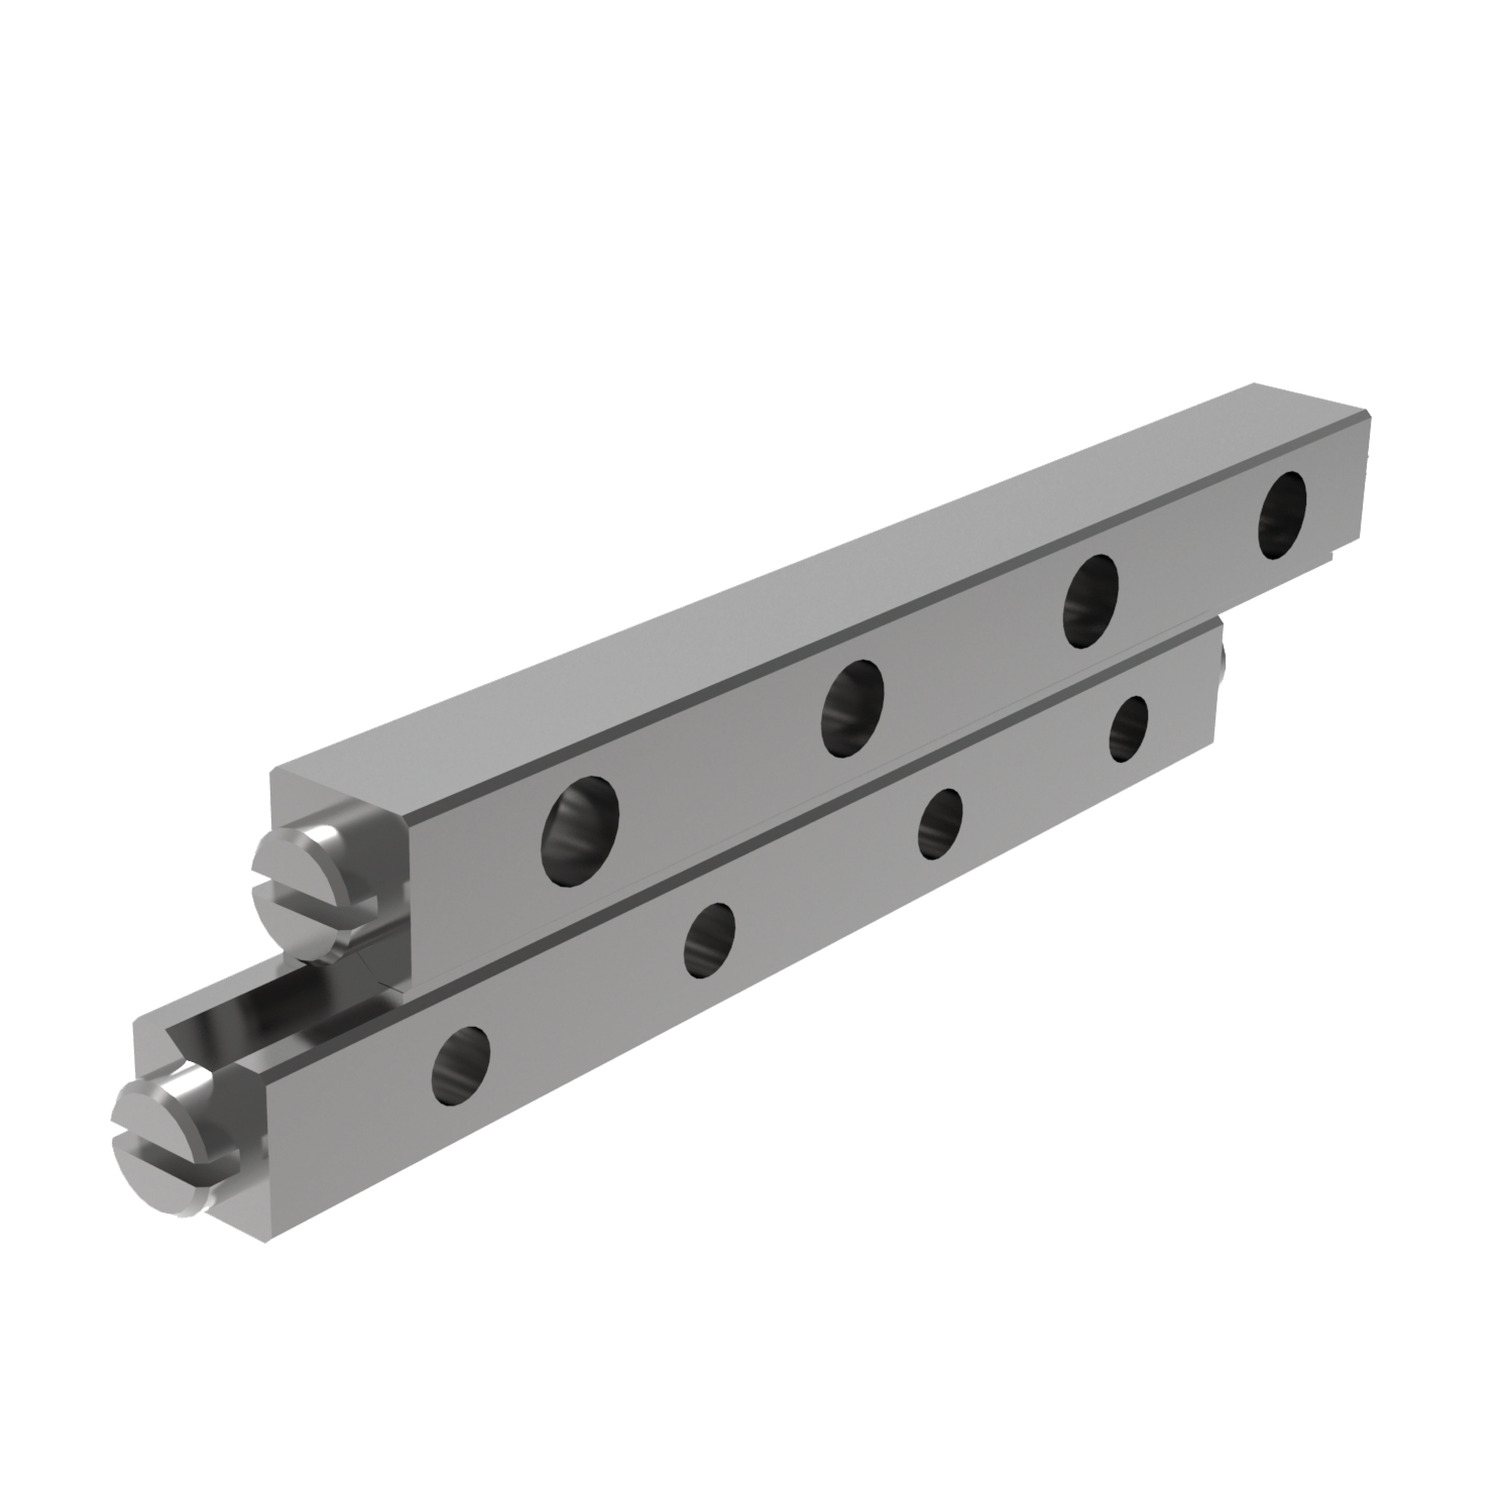 L1001.01-050 Cross roller rail sets stainless size 1x Standard linear bearings sets consists of: 4 pcs. Rails, 2 pcs. roller cages, 8 pcs. end screws